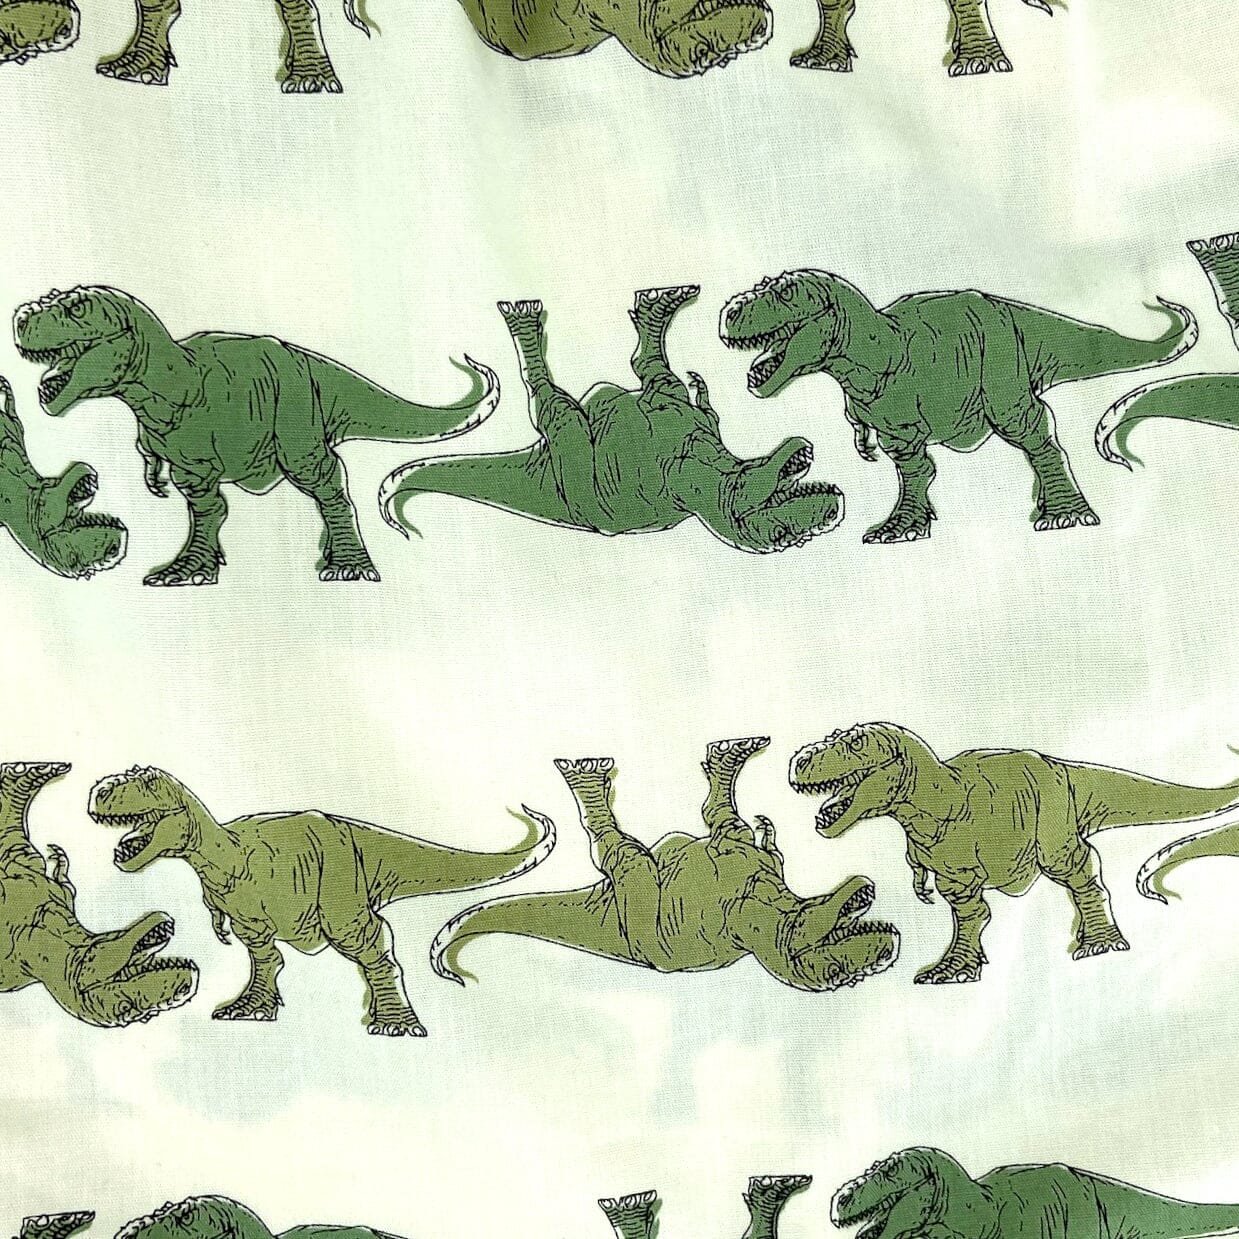 Men's T-Rex Dinosaur All-Over-Print Cotton Boxer Shorts Underwear